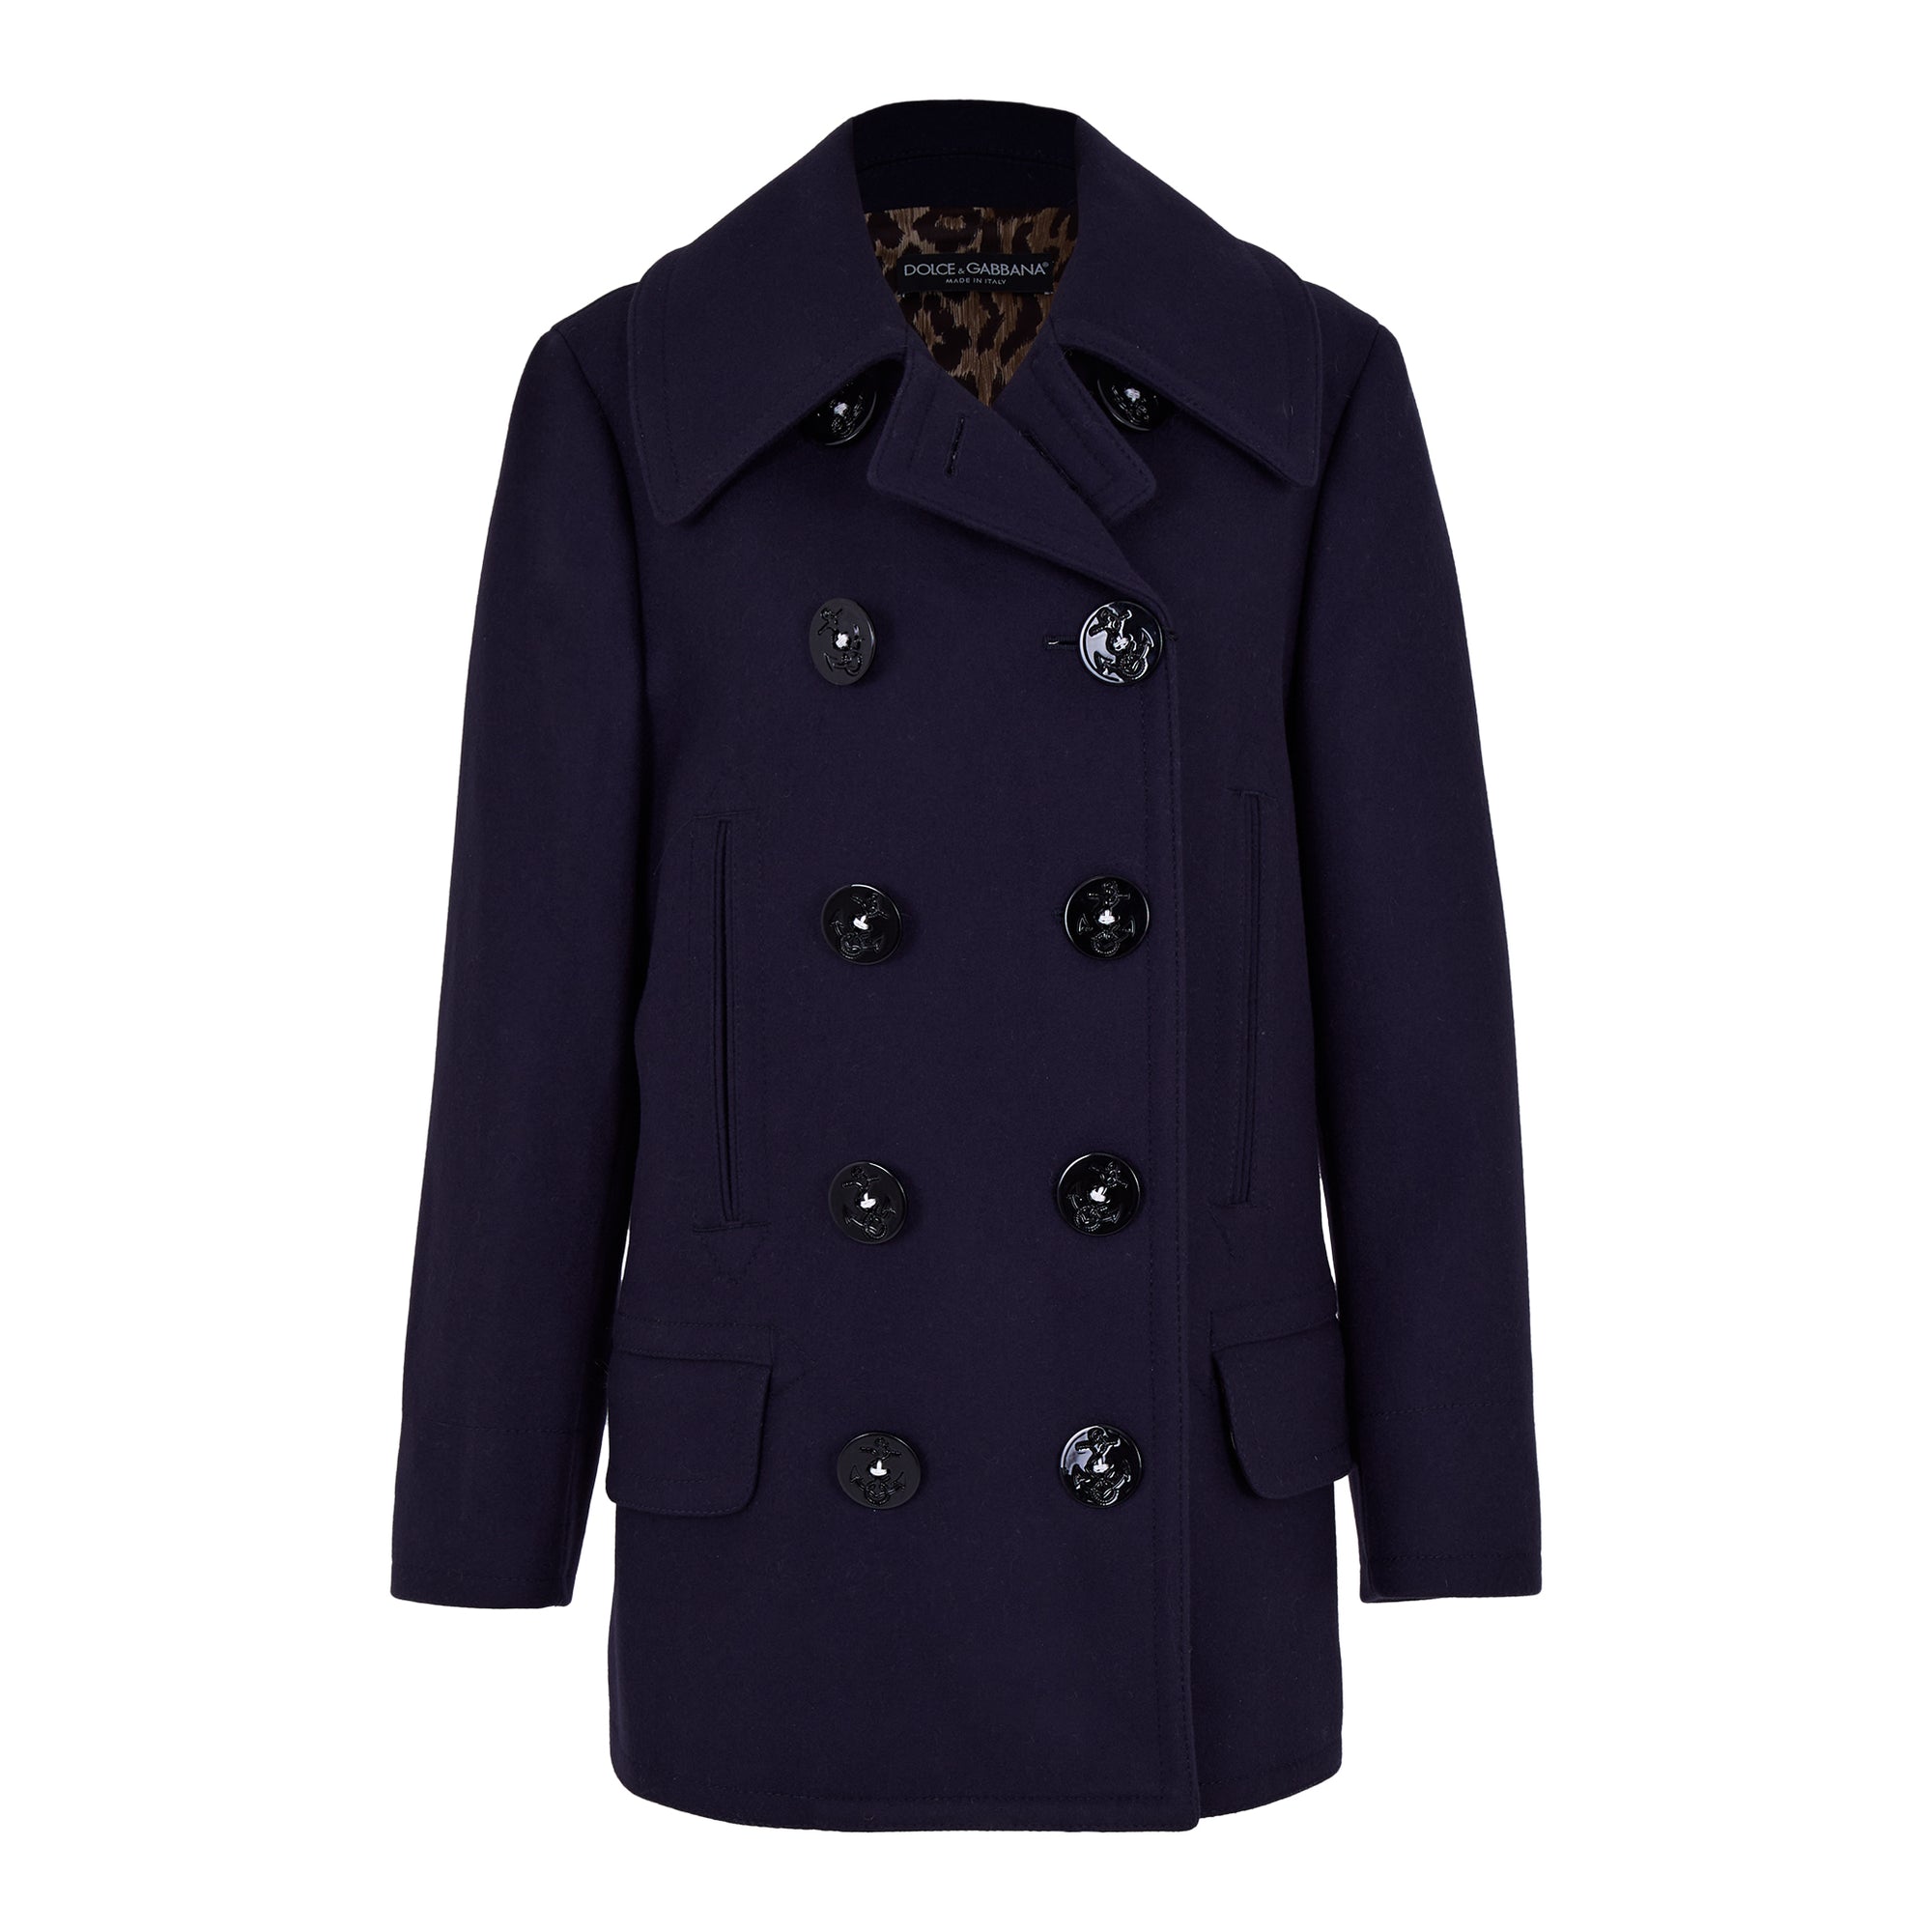 Dolce & Gabbana Navy blue coat